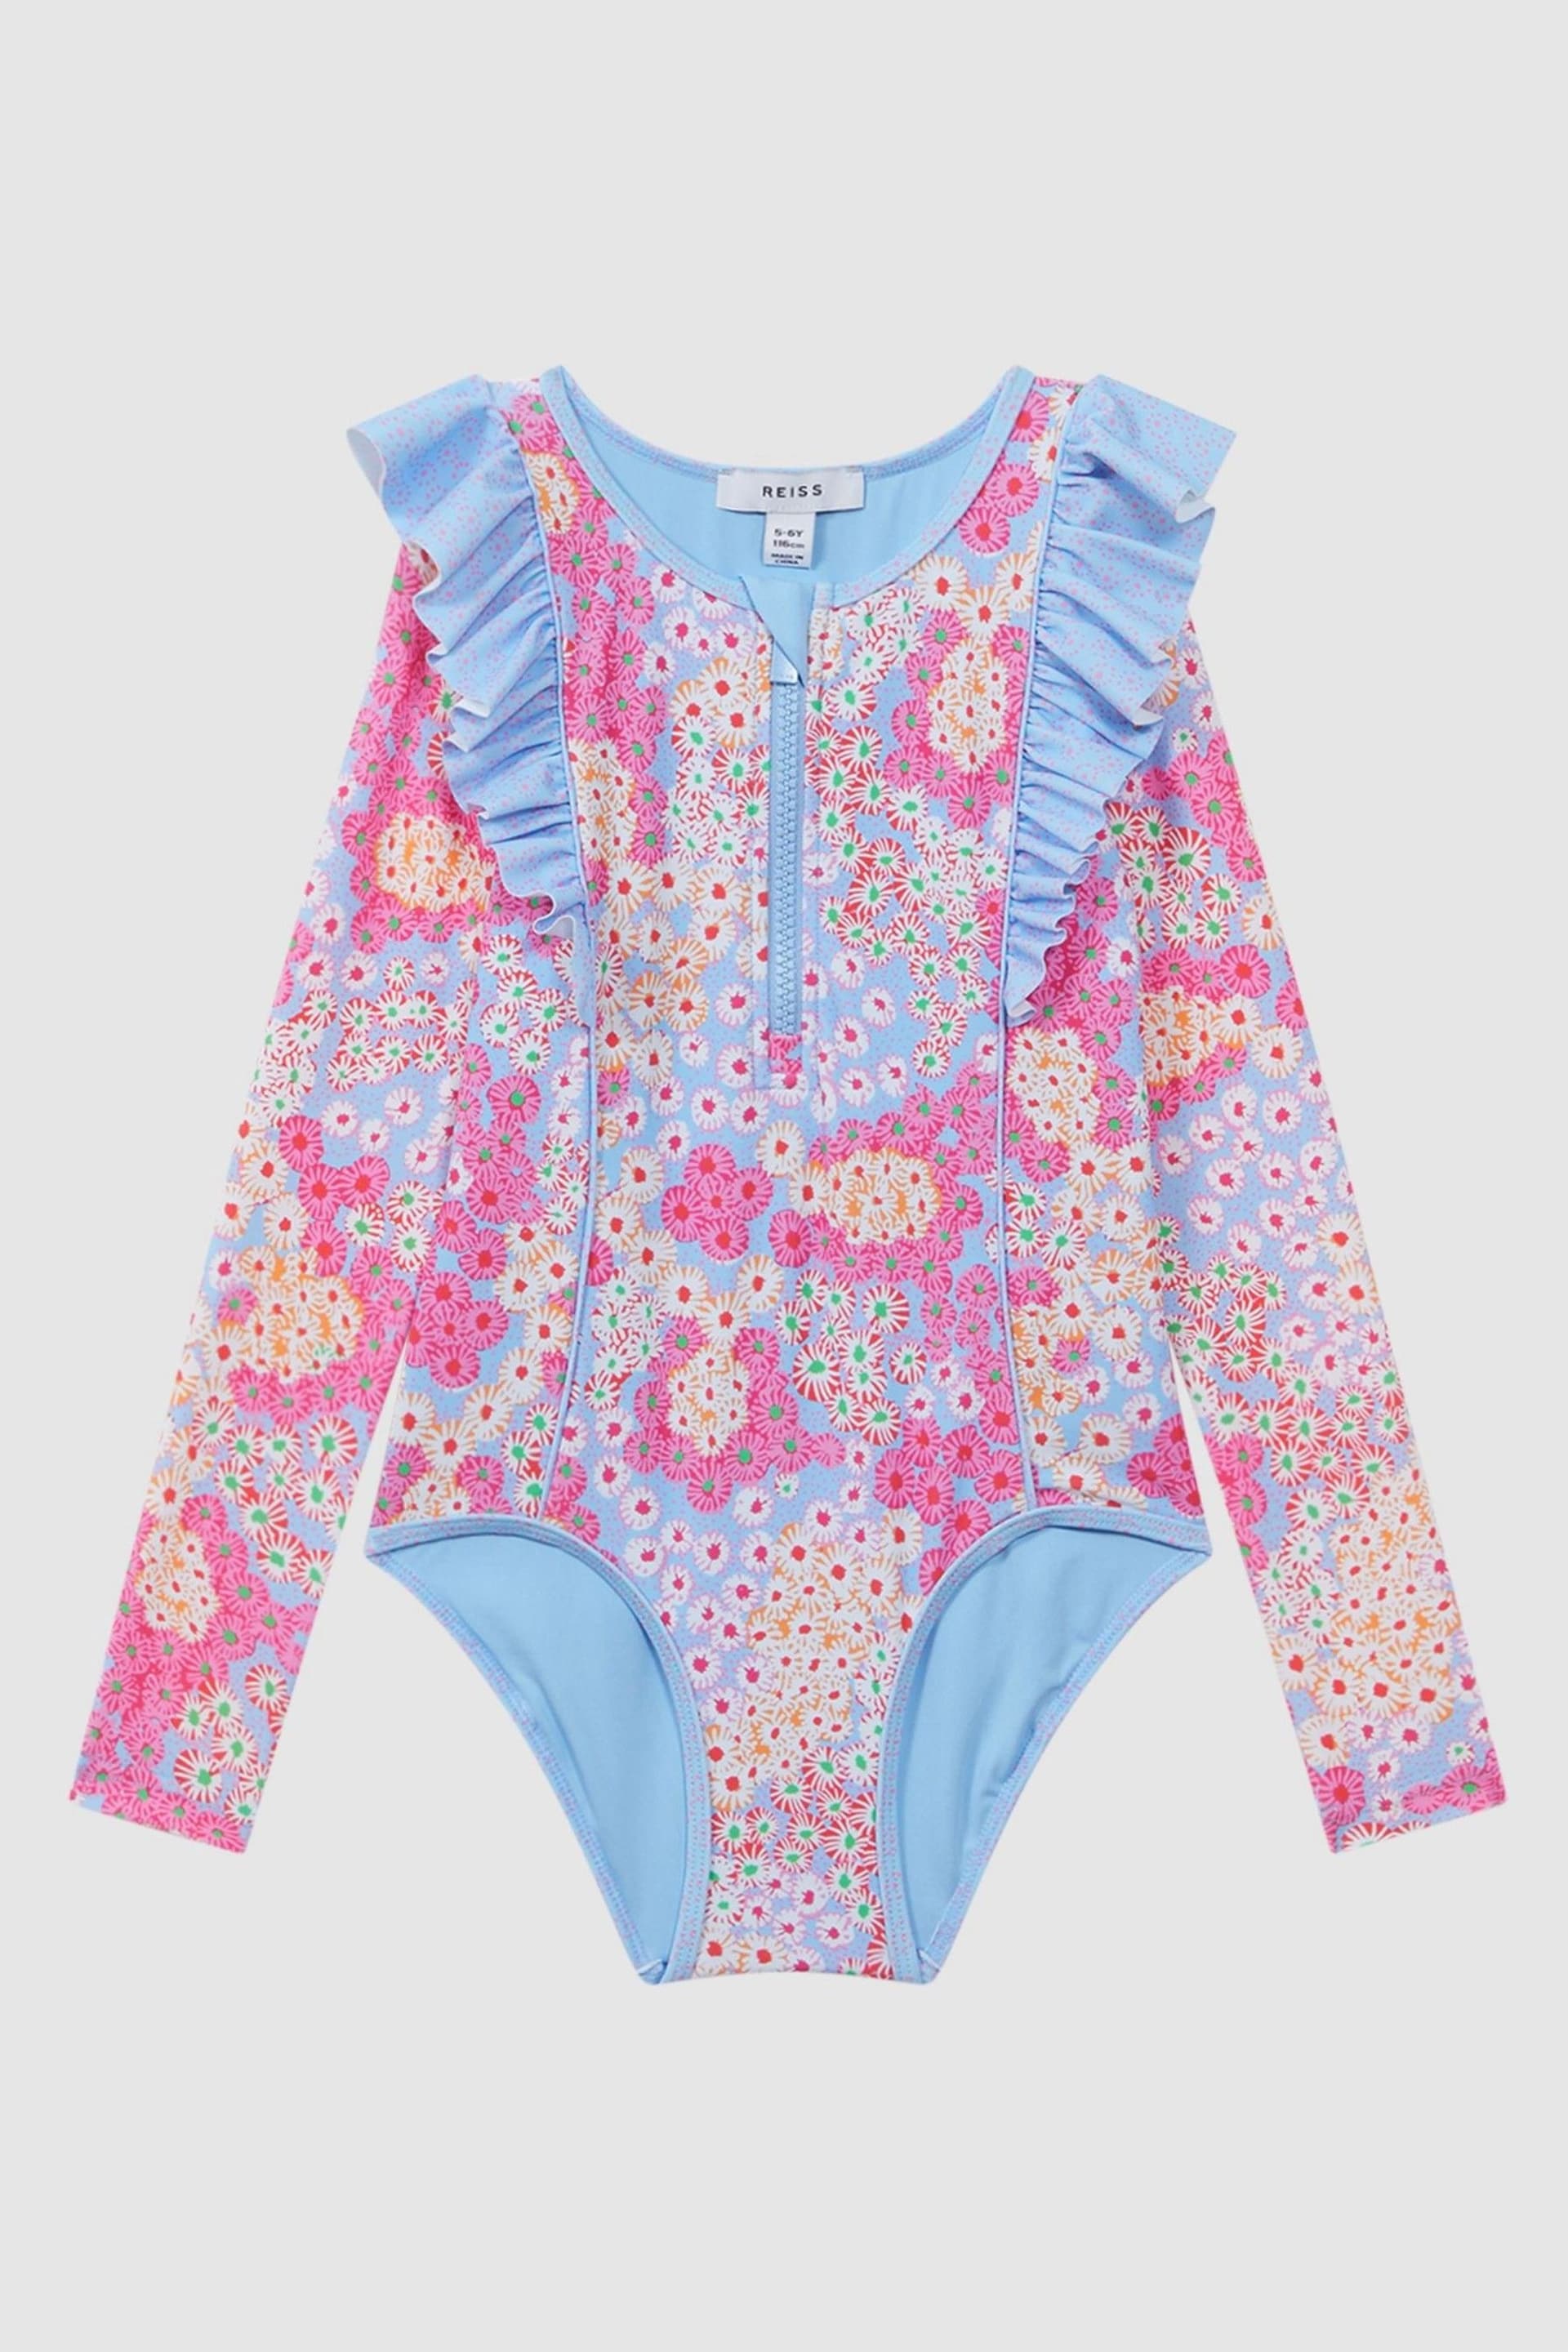 Reiss Pink Poppy Senior Floral Print Ruffle Long Sleeve Swimsuit - Image 2 of 6